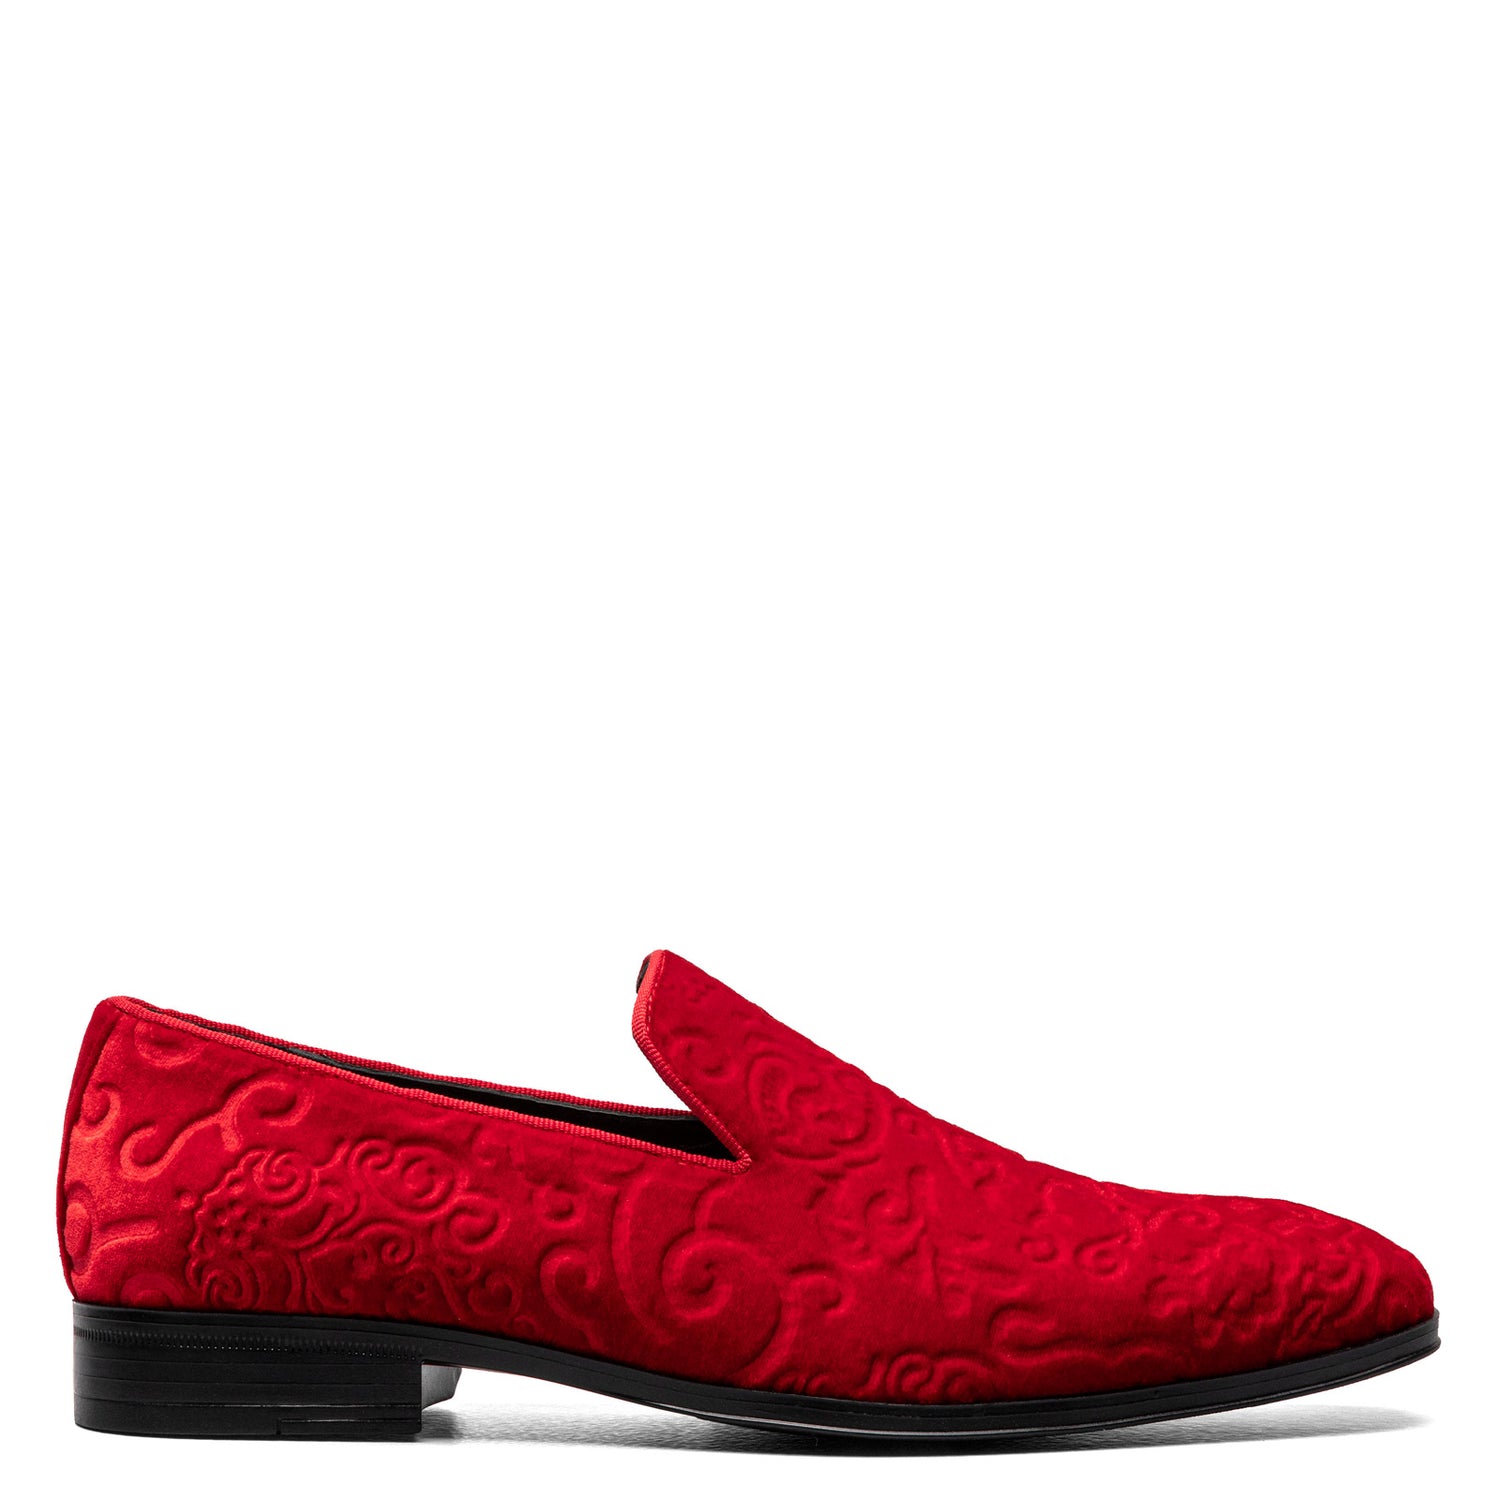 Peltz Shoes  Men's Stacy Adams Saunders Loafer RED BEAN 25581-600